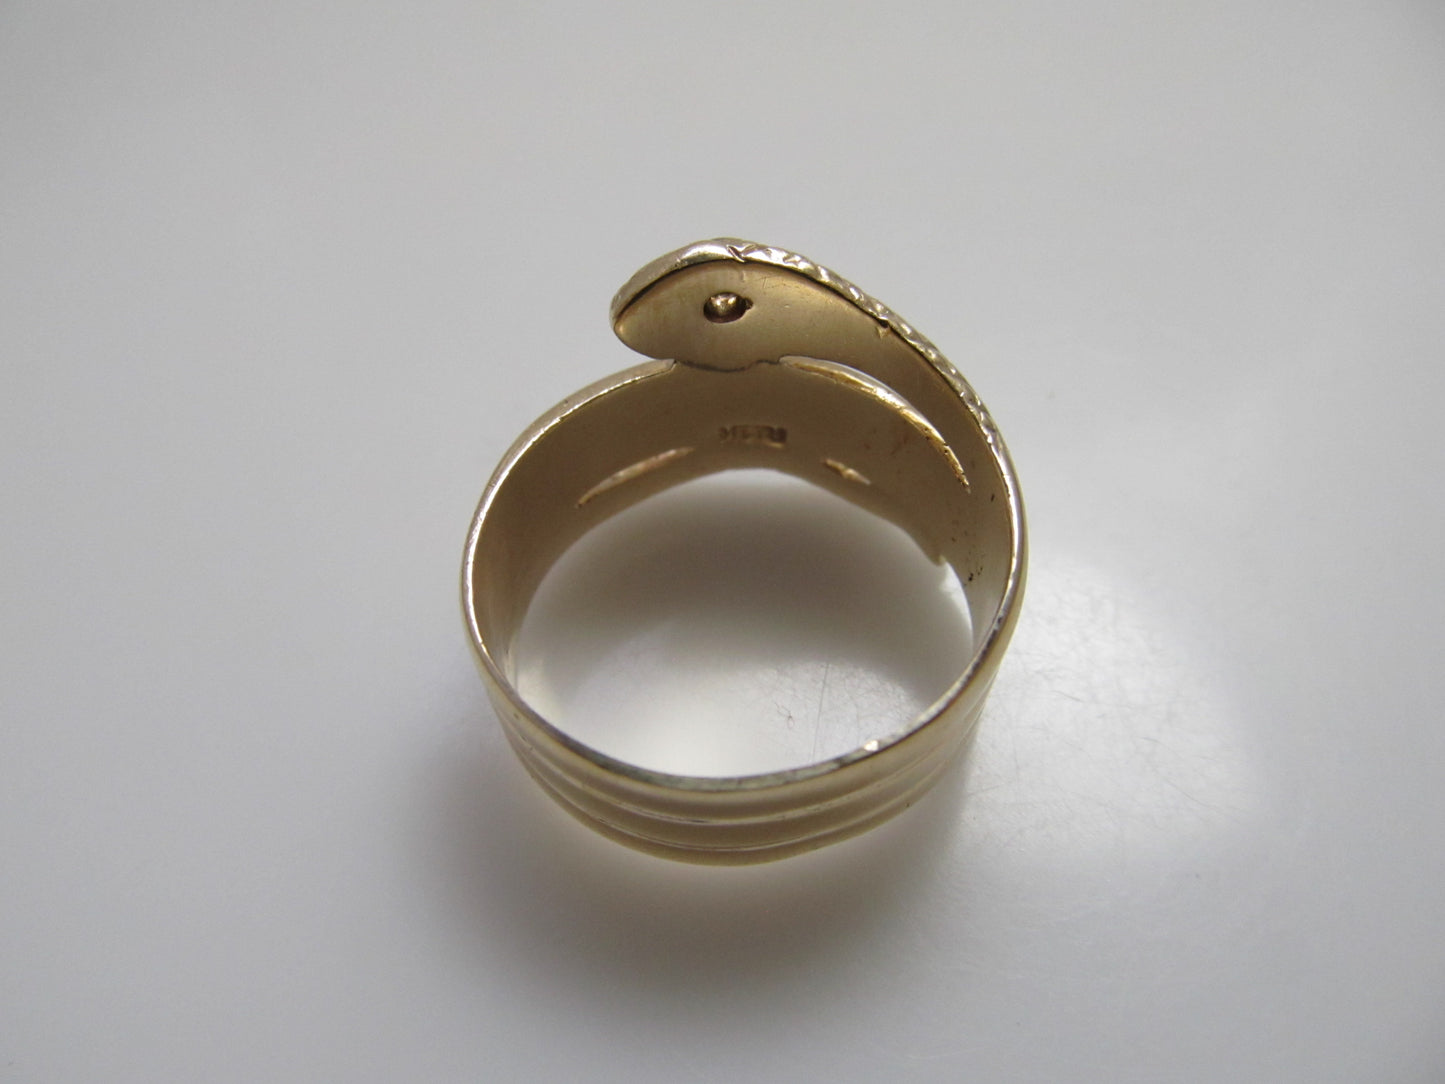 Vintage coiled snake ring